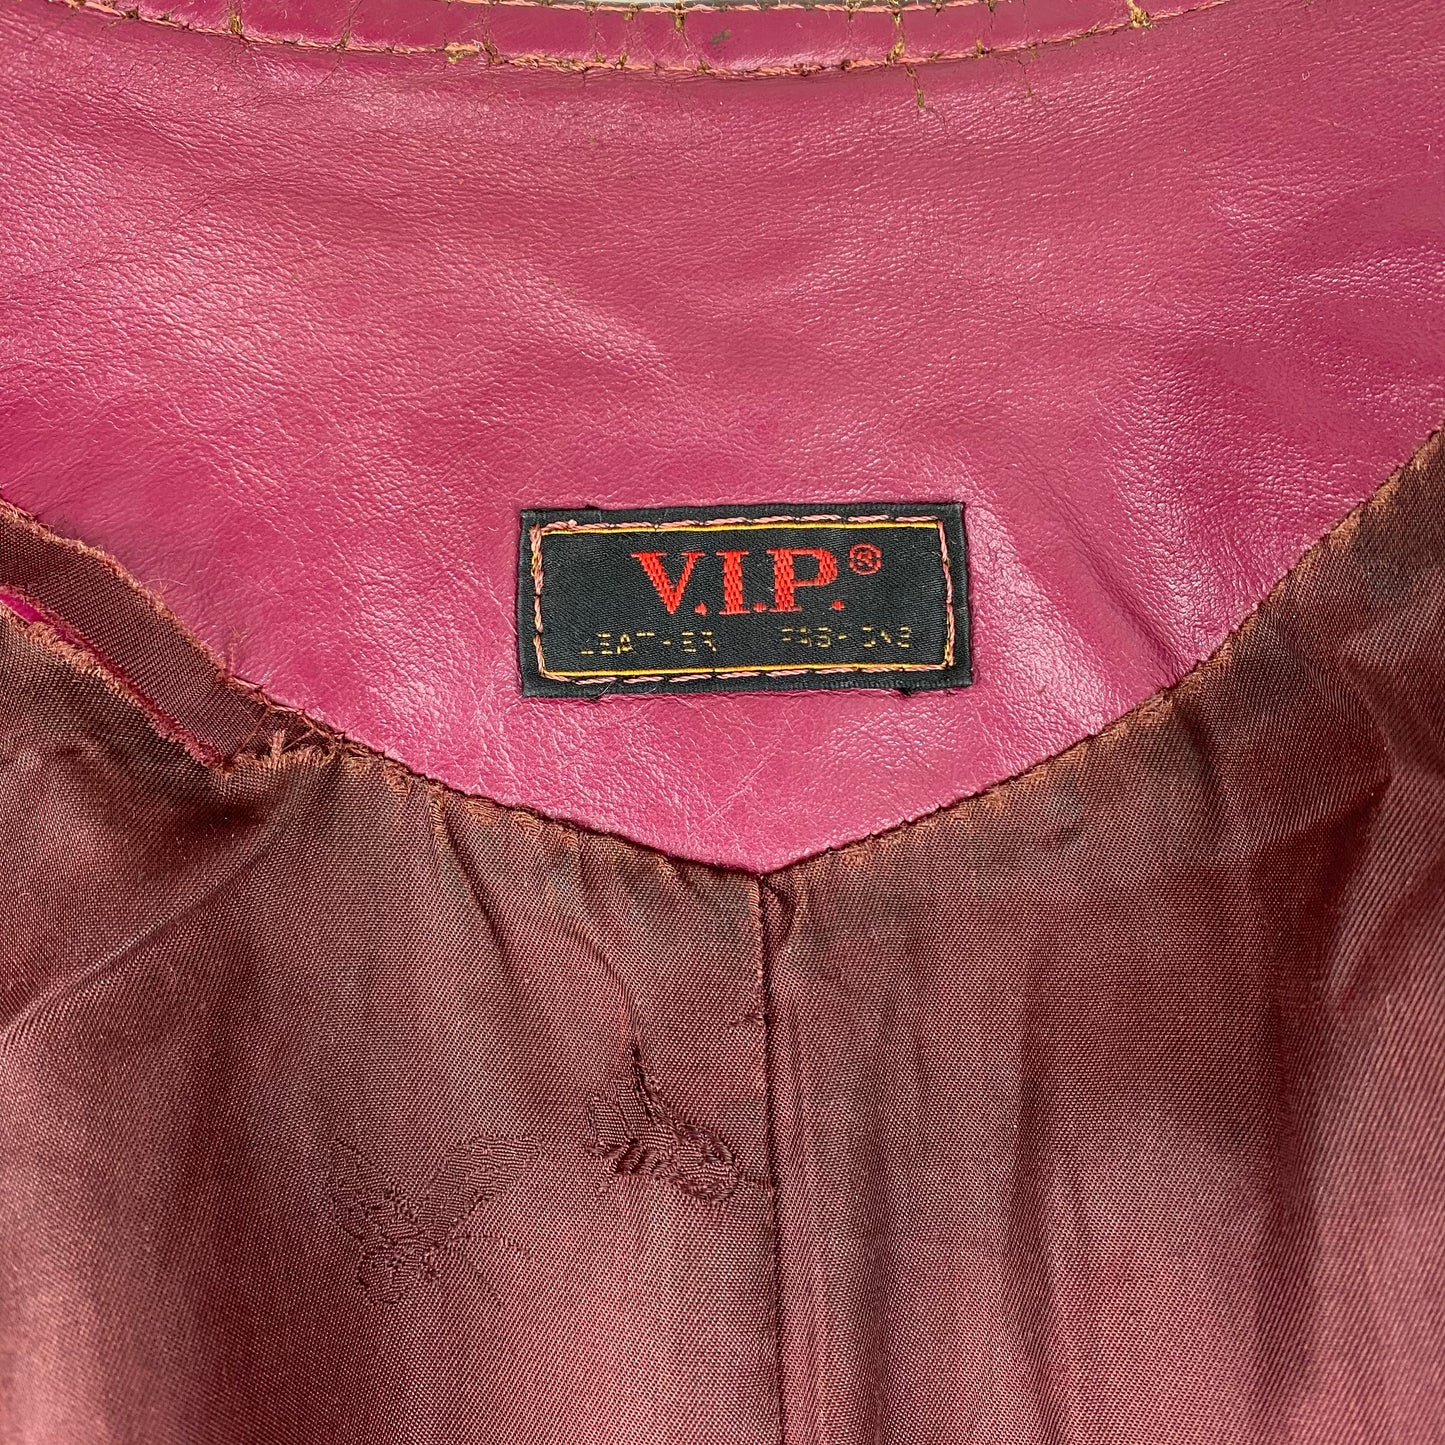 Vintage V.I.P. Maroon Leather Jacket